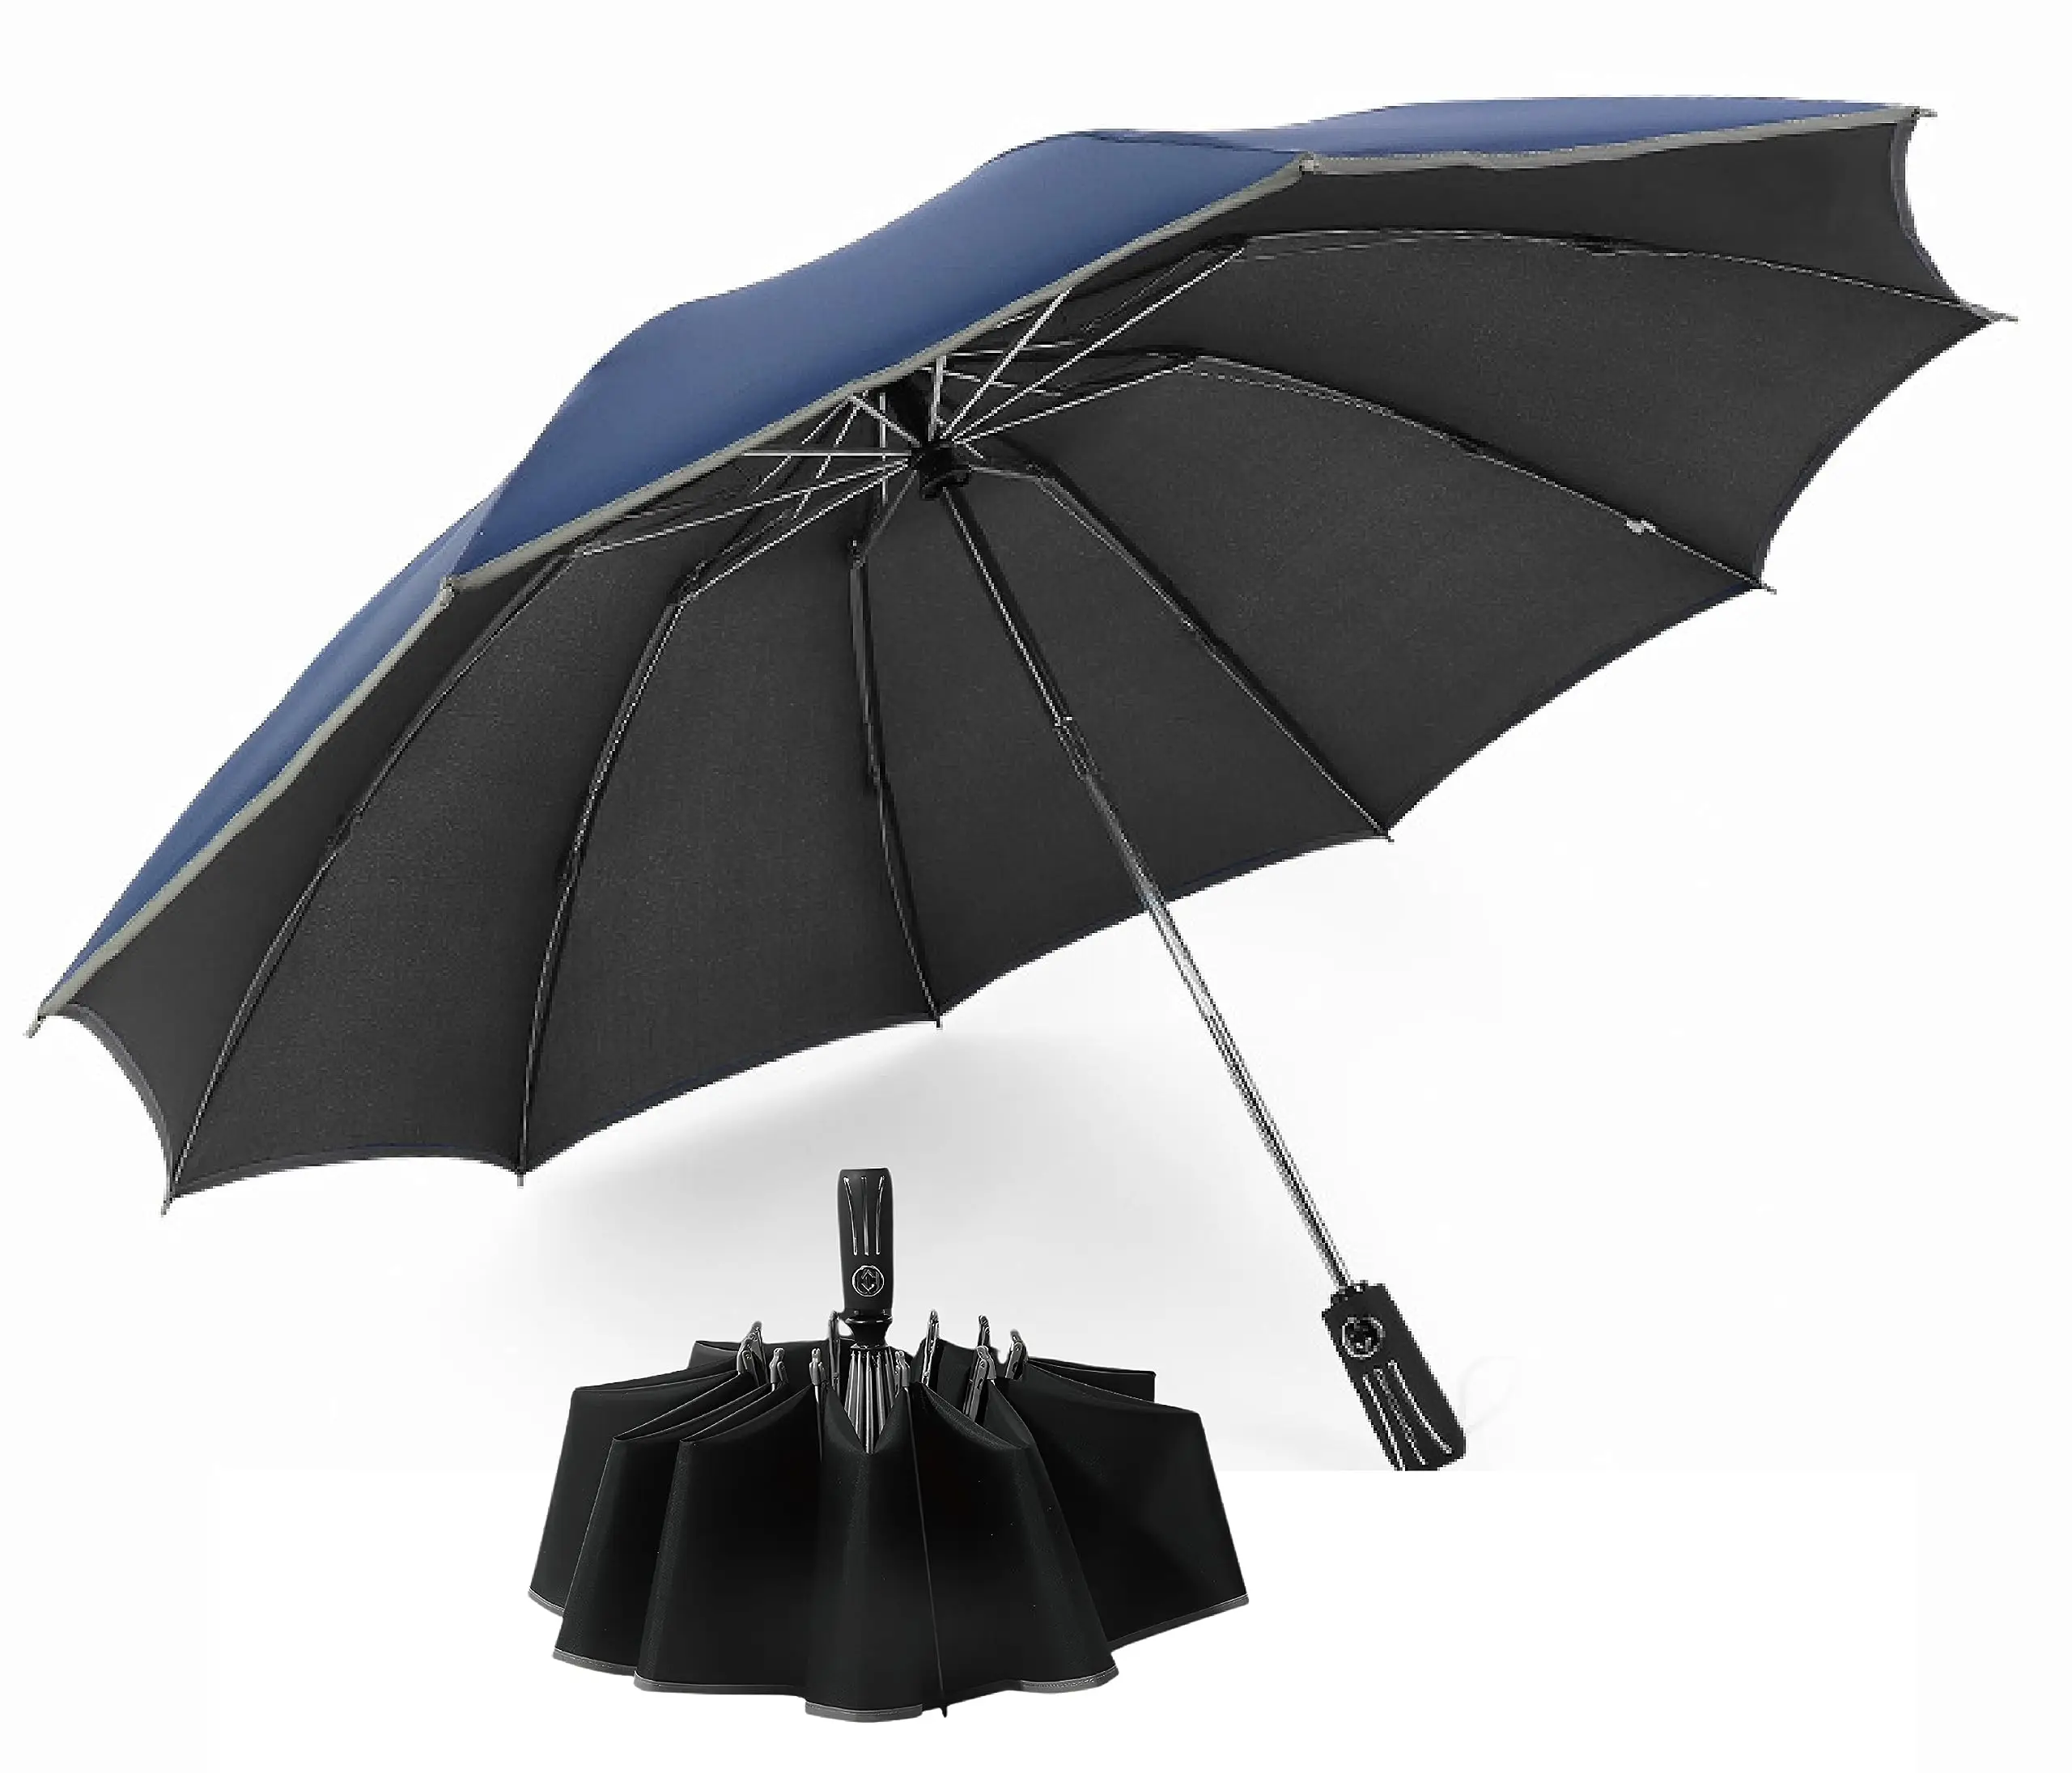 umbrella supplier parasol Inverted Automatic Umbrella Safety Reflective Strip with logo custom outdoor smart 3folding umbrella